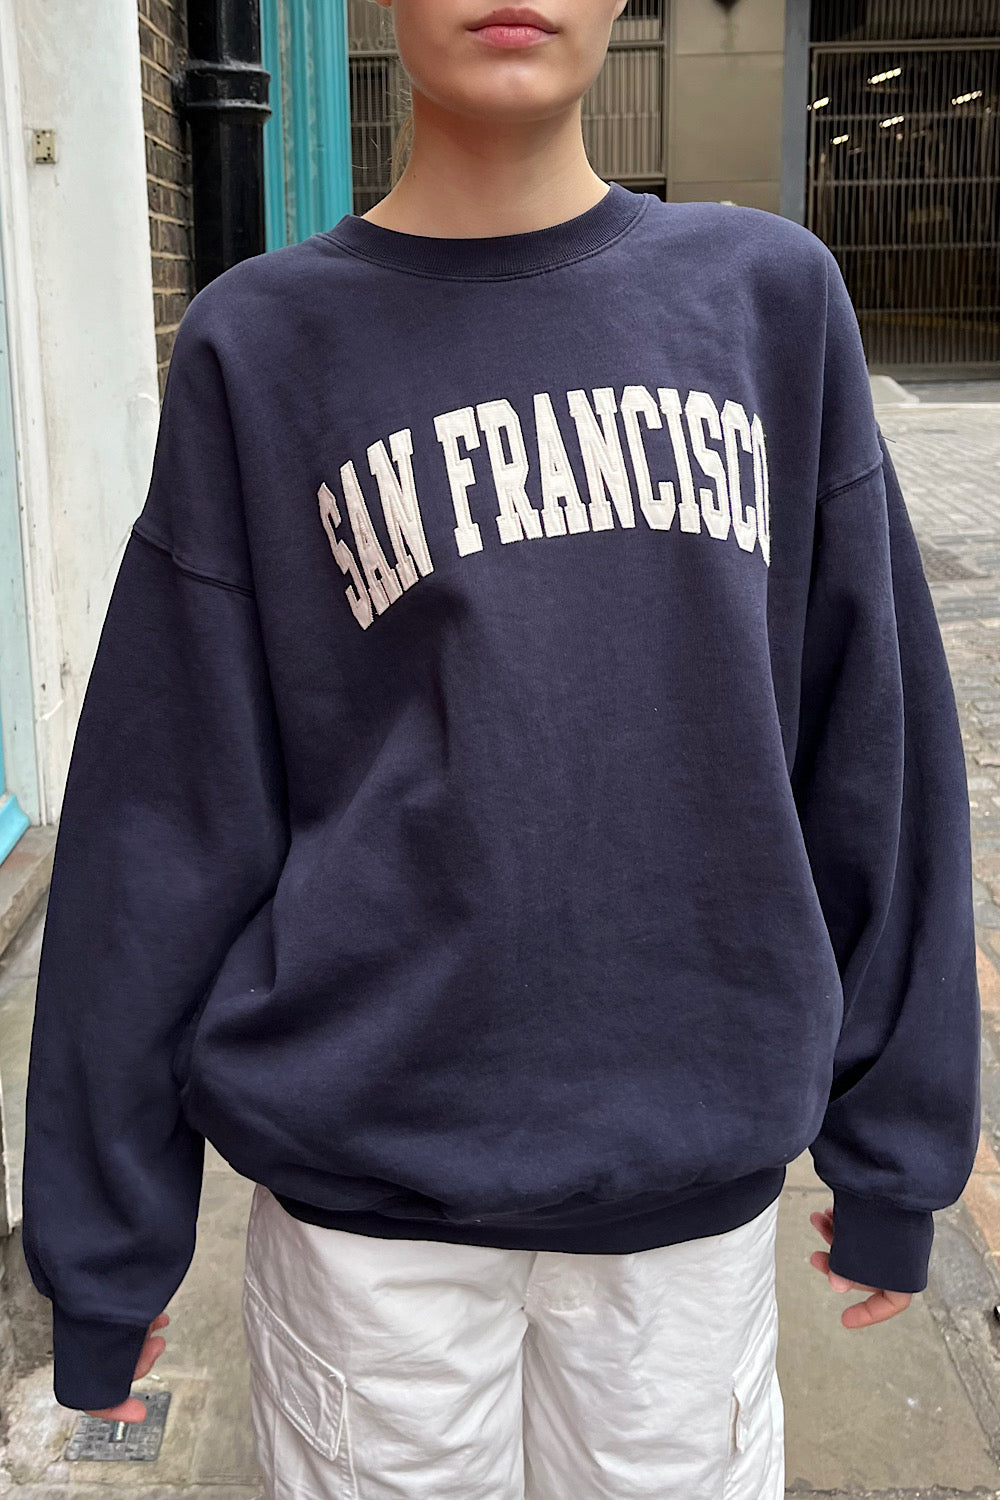 Erica San Francisco Sweatshirt